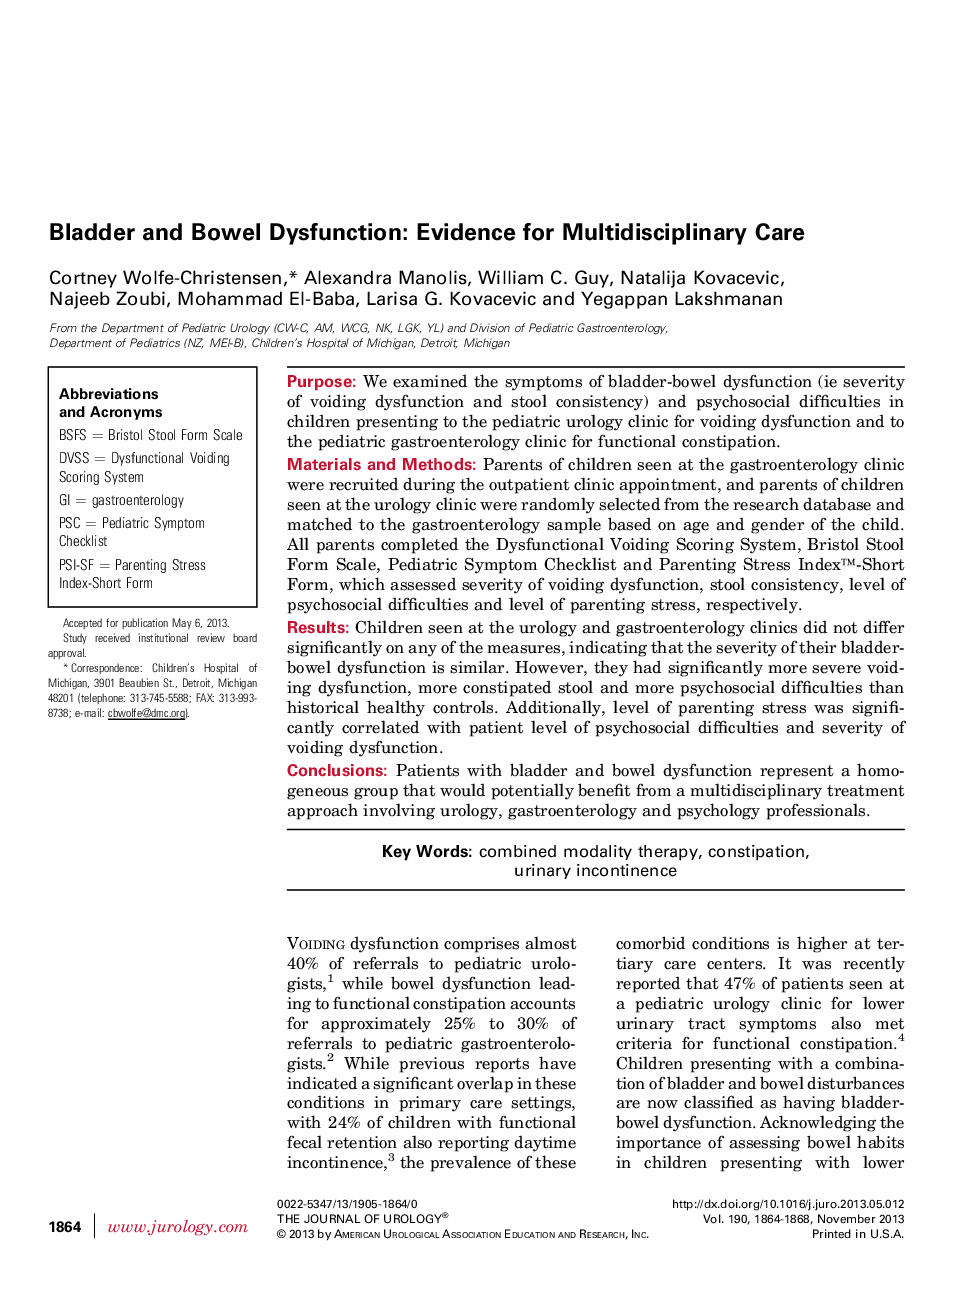 Bladder and Bowel Dysfunction: Evidence for Multidisciplinary Care